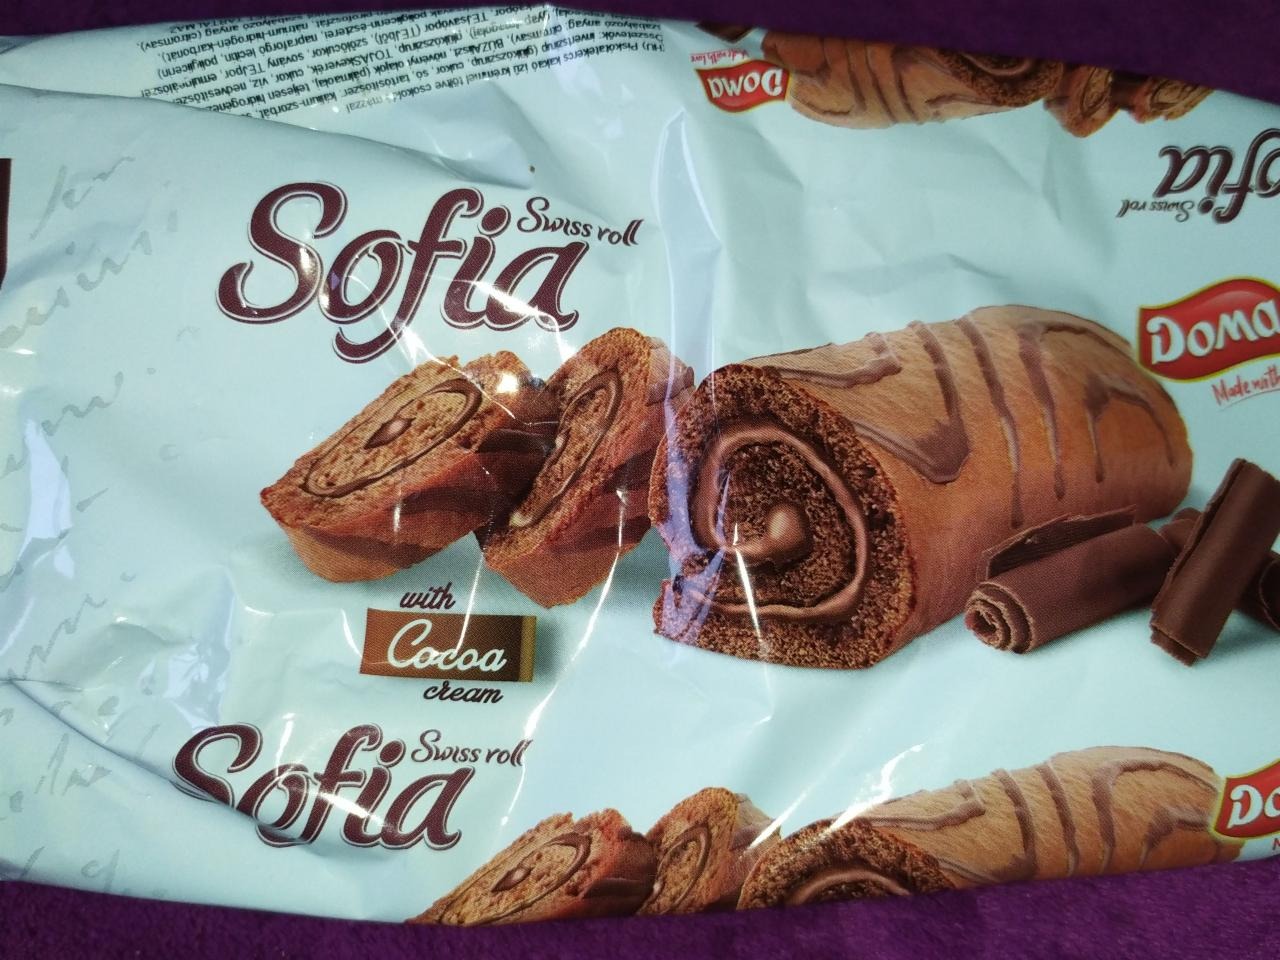 Képek - Sofia Swiss Roll with Cocoa cream Doma